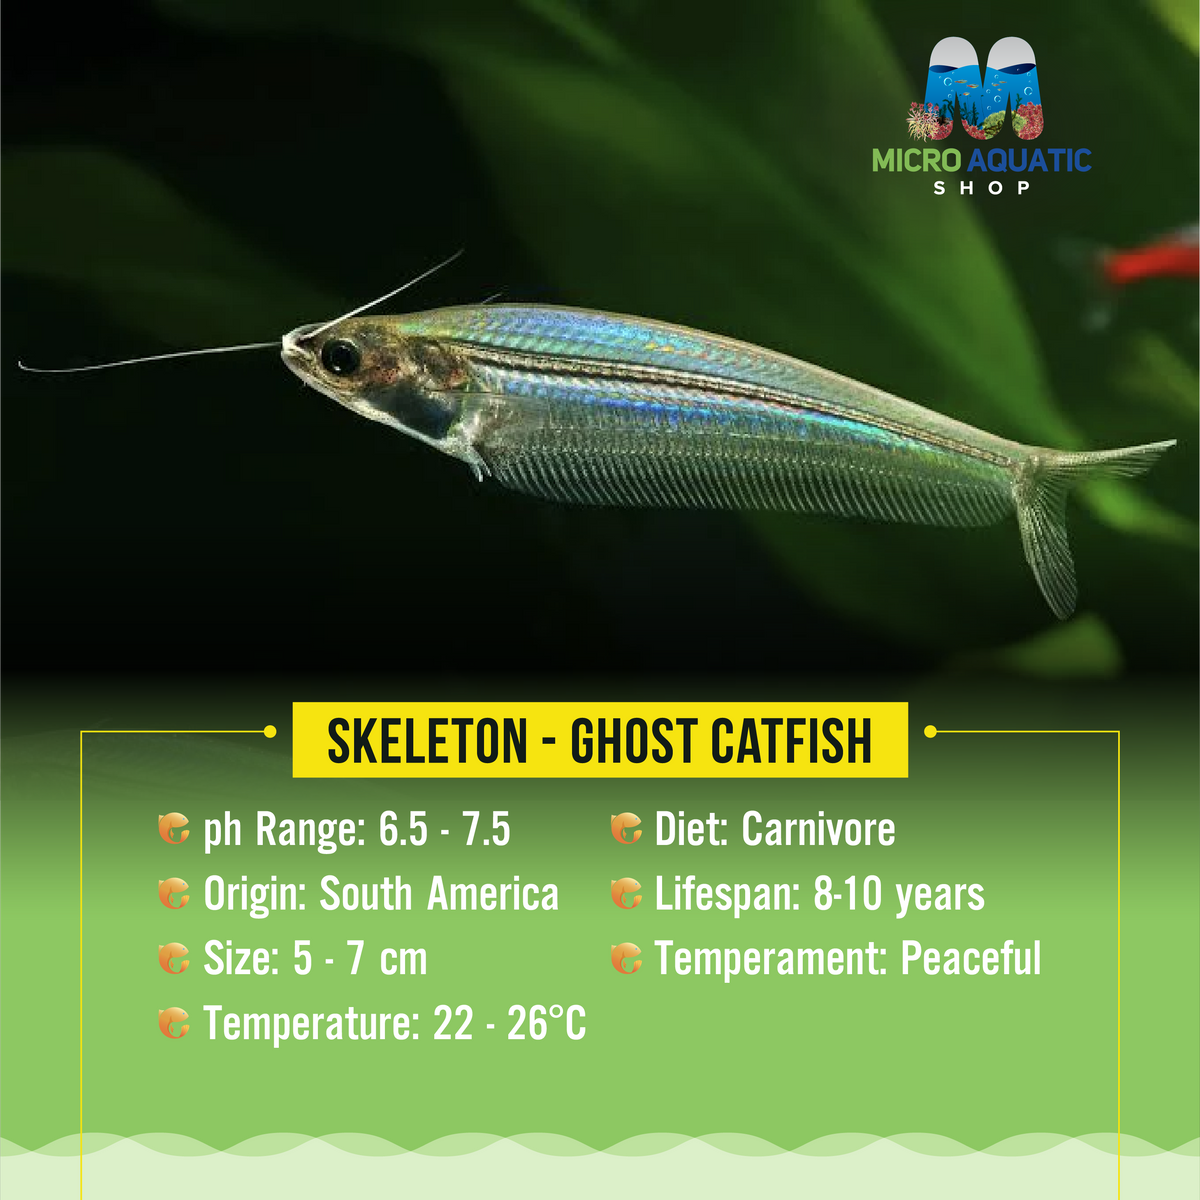 Skeleton - Ghost Catfish